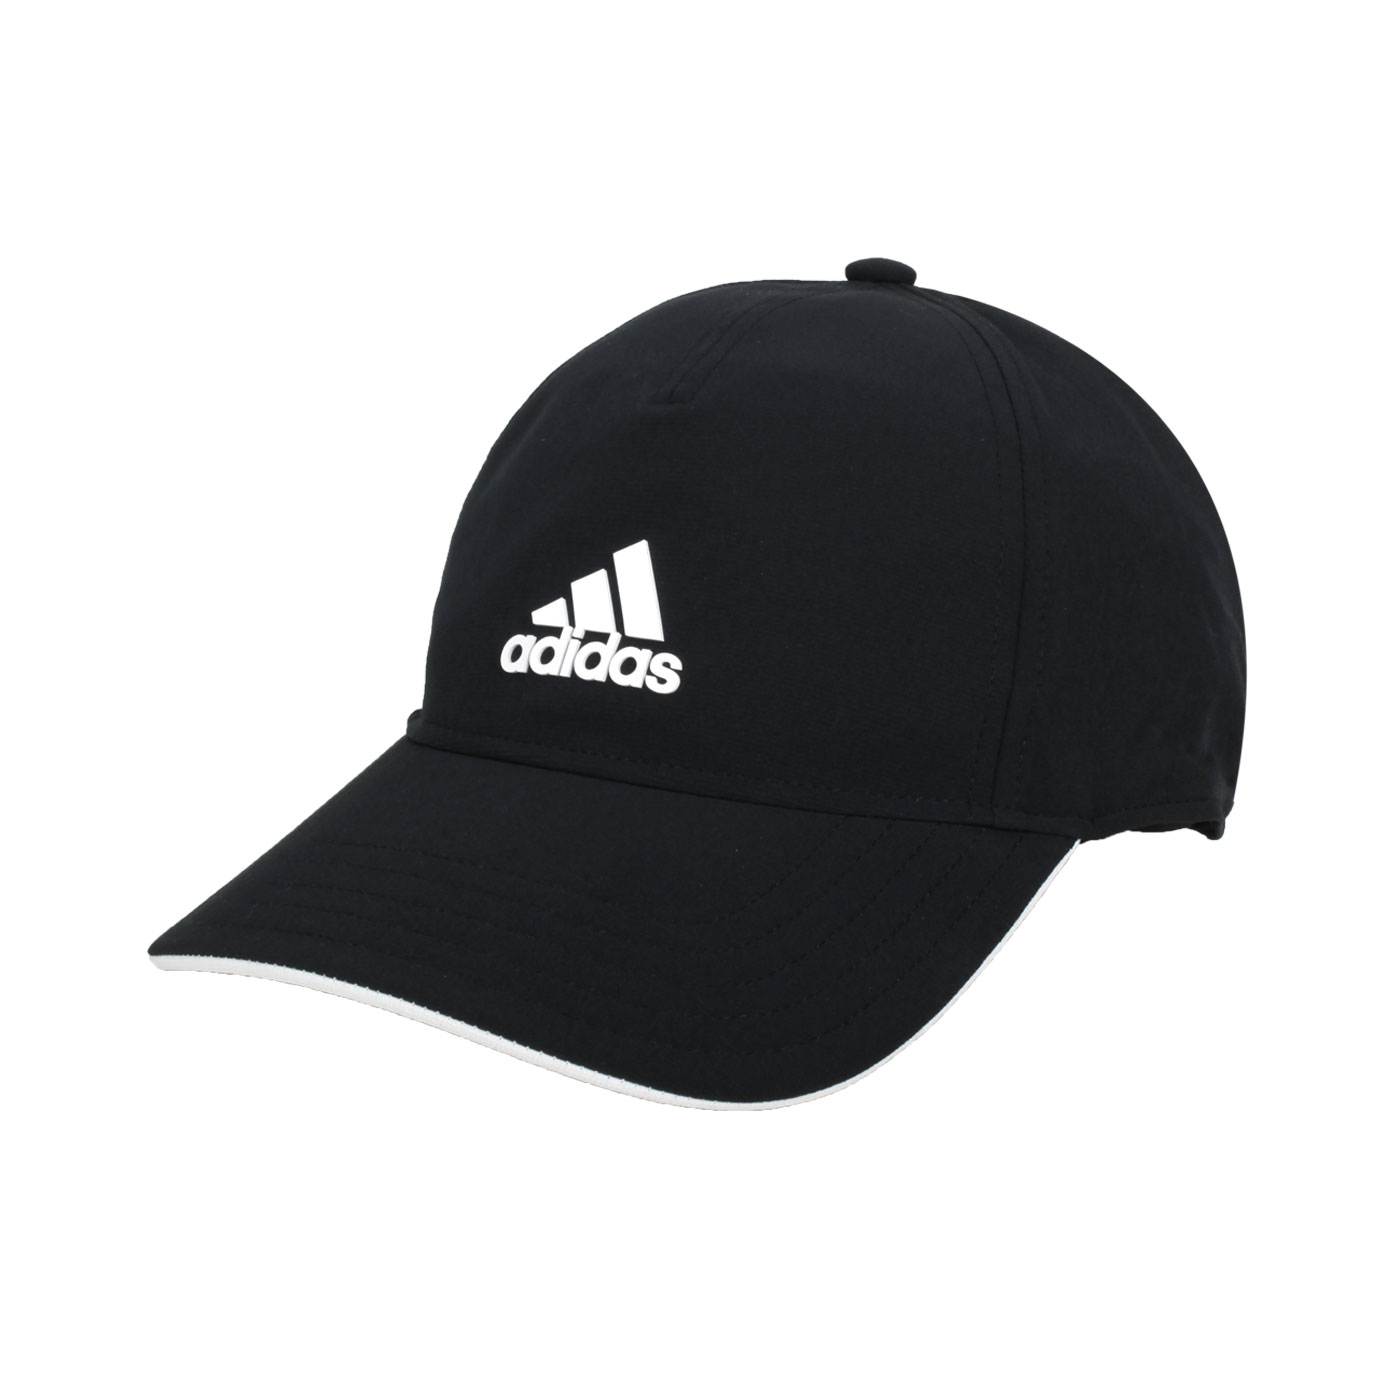 ADIDAS 帽子 GM6274 - 黑白